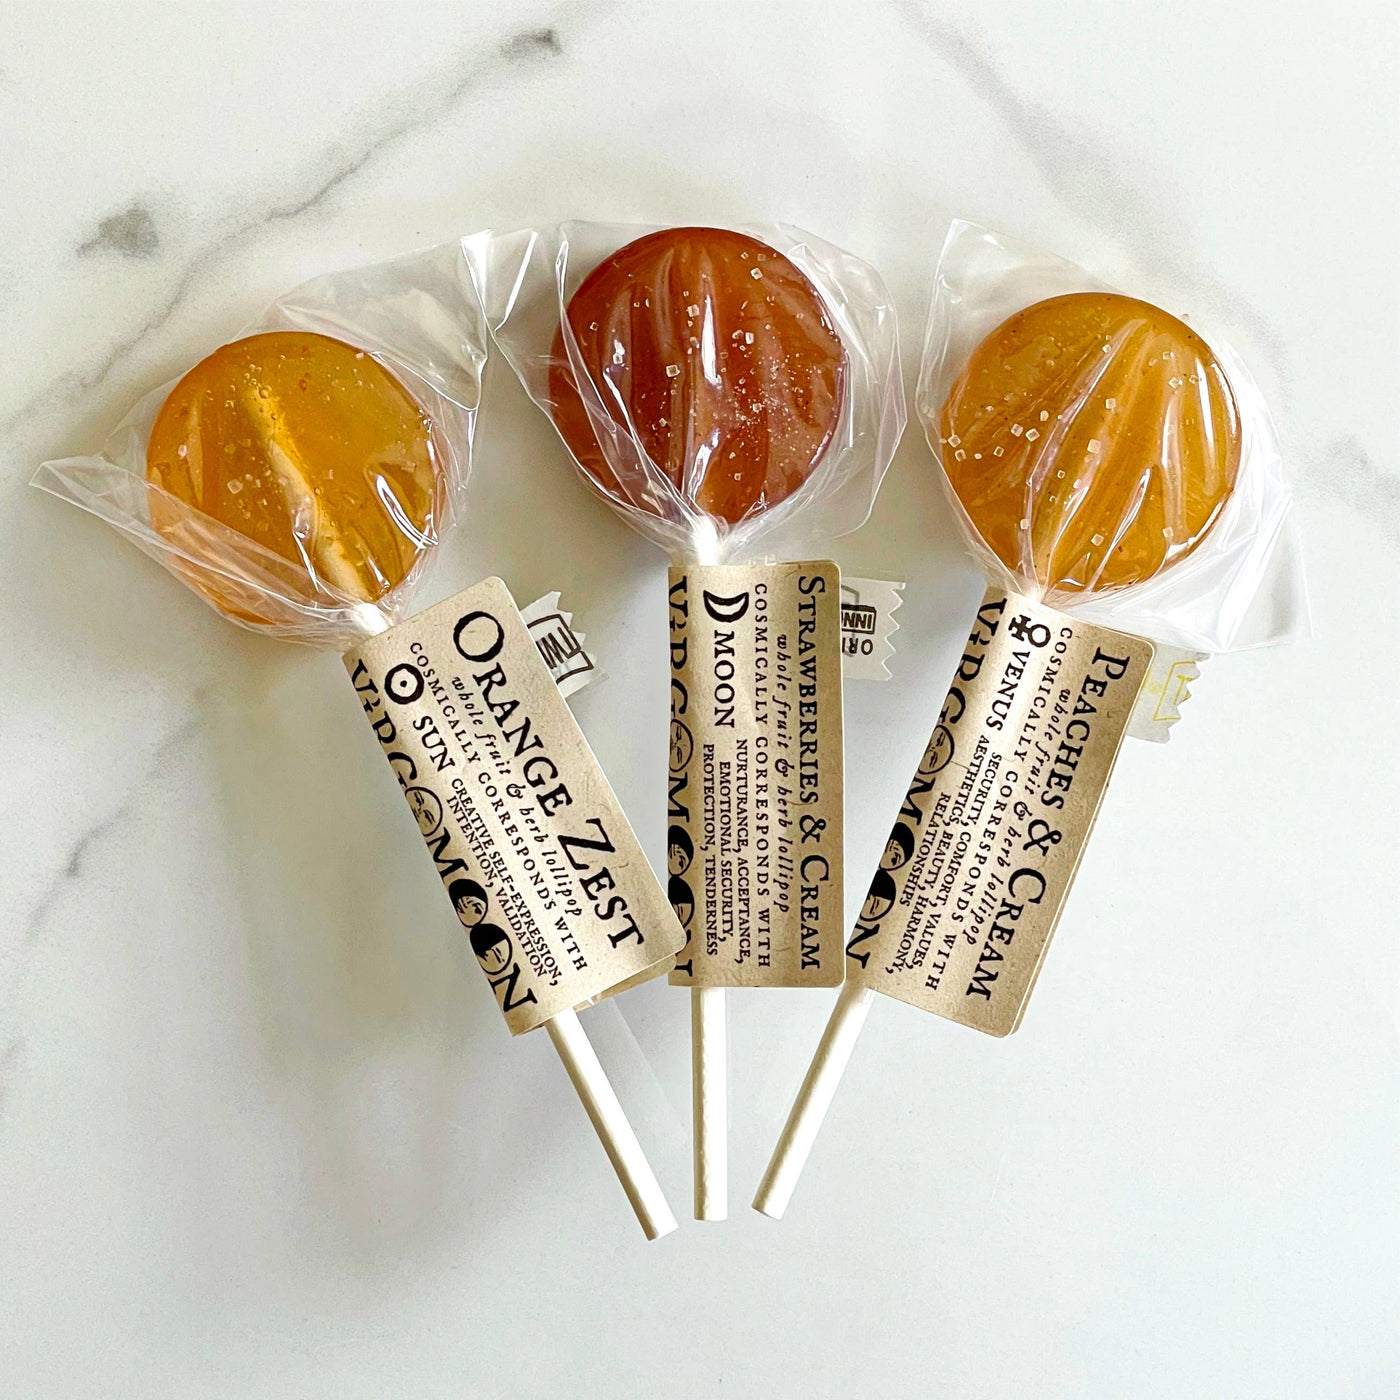 Plants & Planets Lollipops - Cosmic Candy Apothecary: Orange Zest